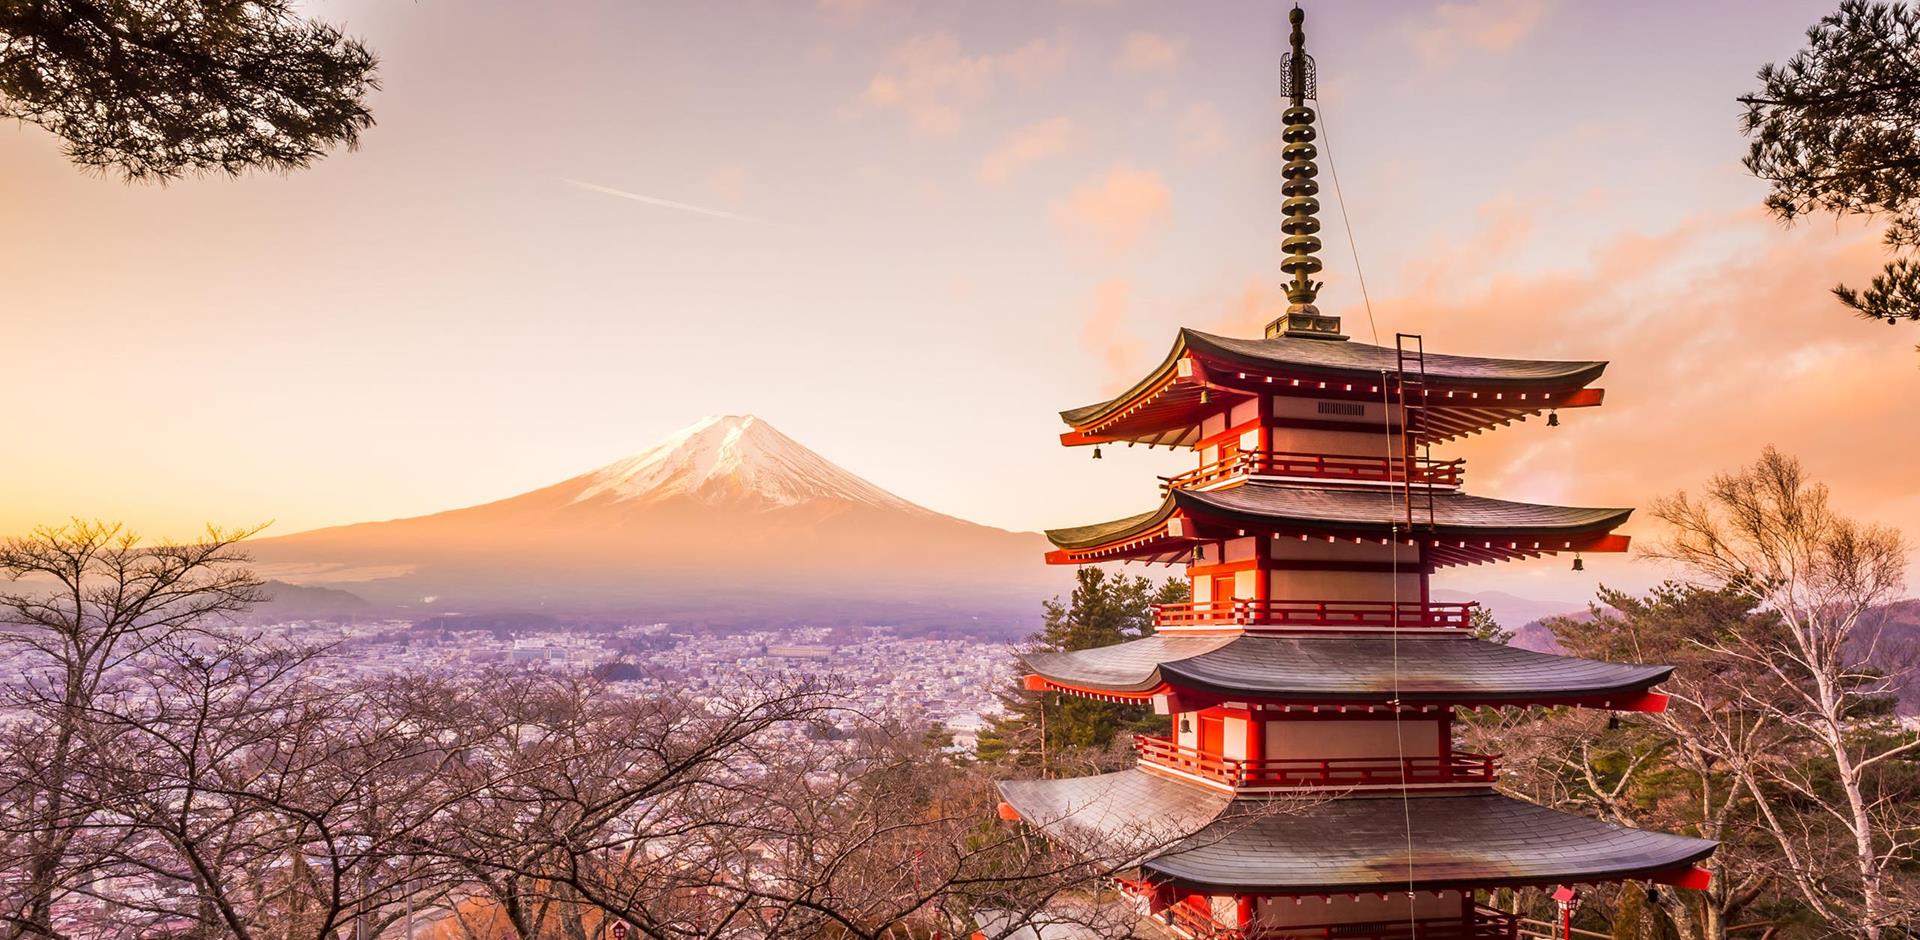 Chureito Pagoda & Mount Fuji, Japan